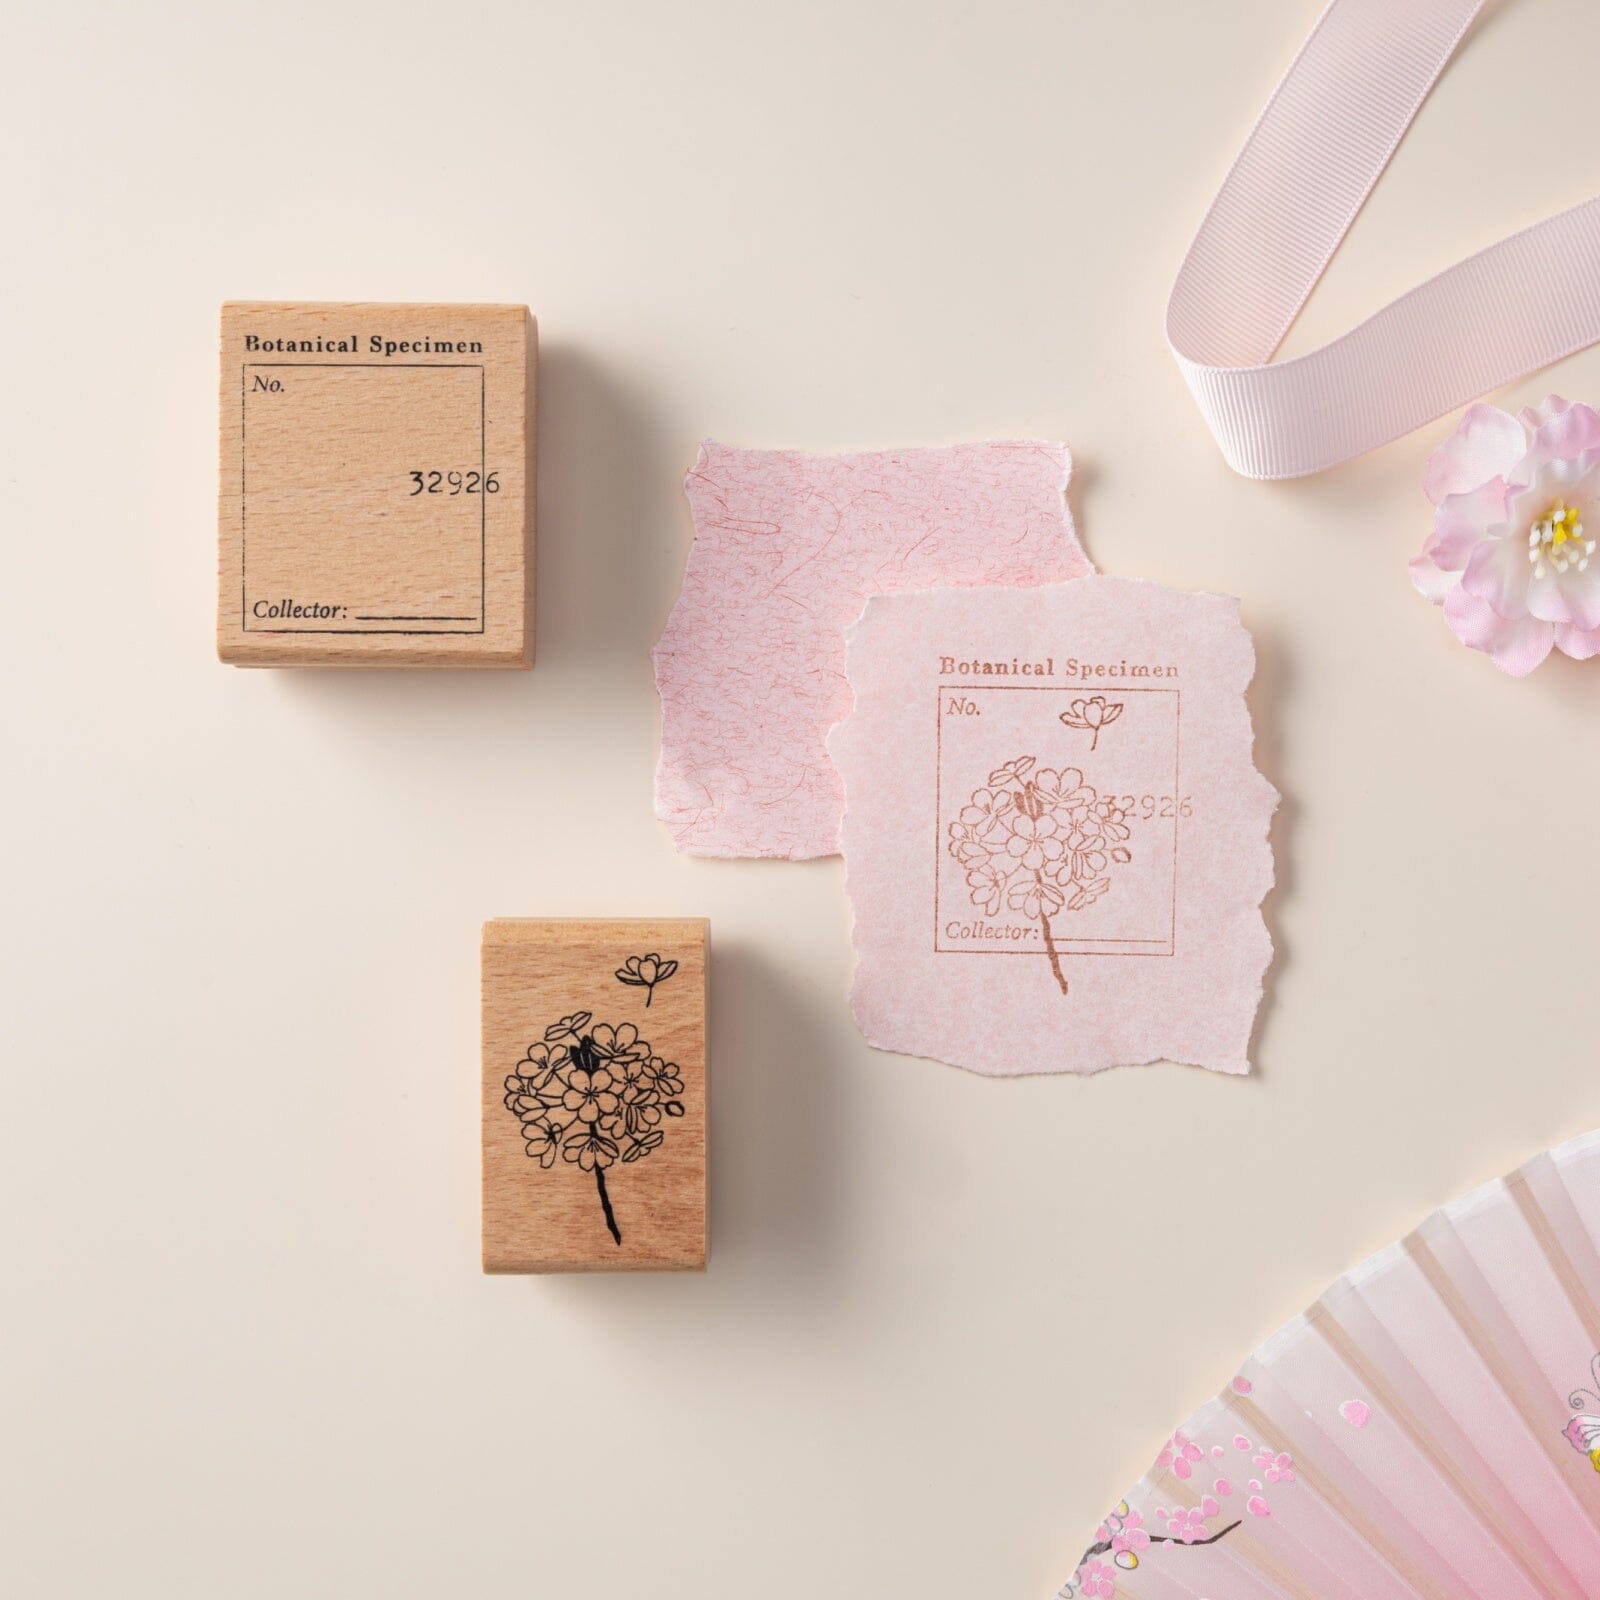 Botanical specimen stamp on pink paper with cherry blossom stamp inside the frame